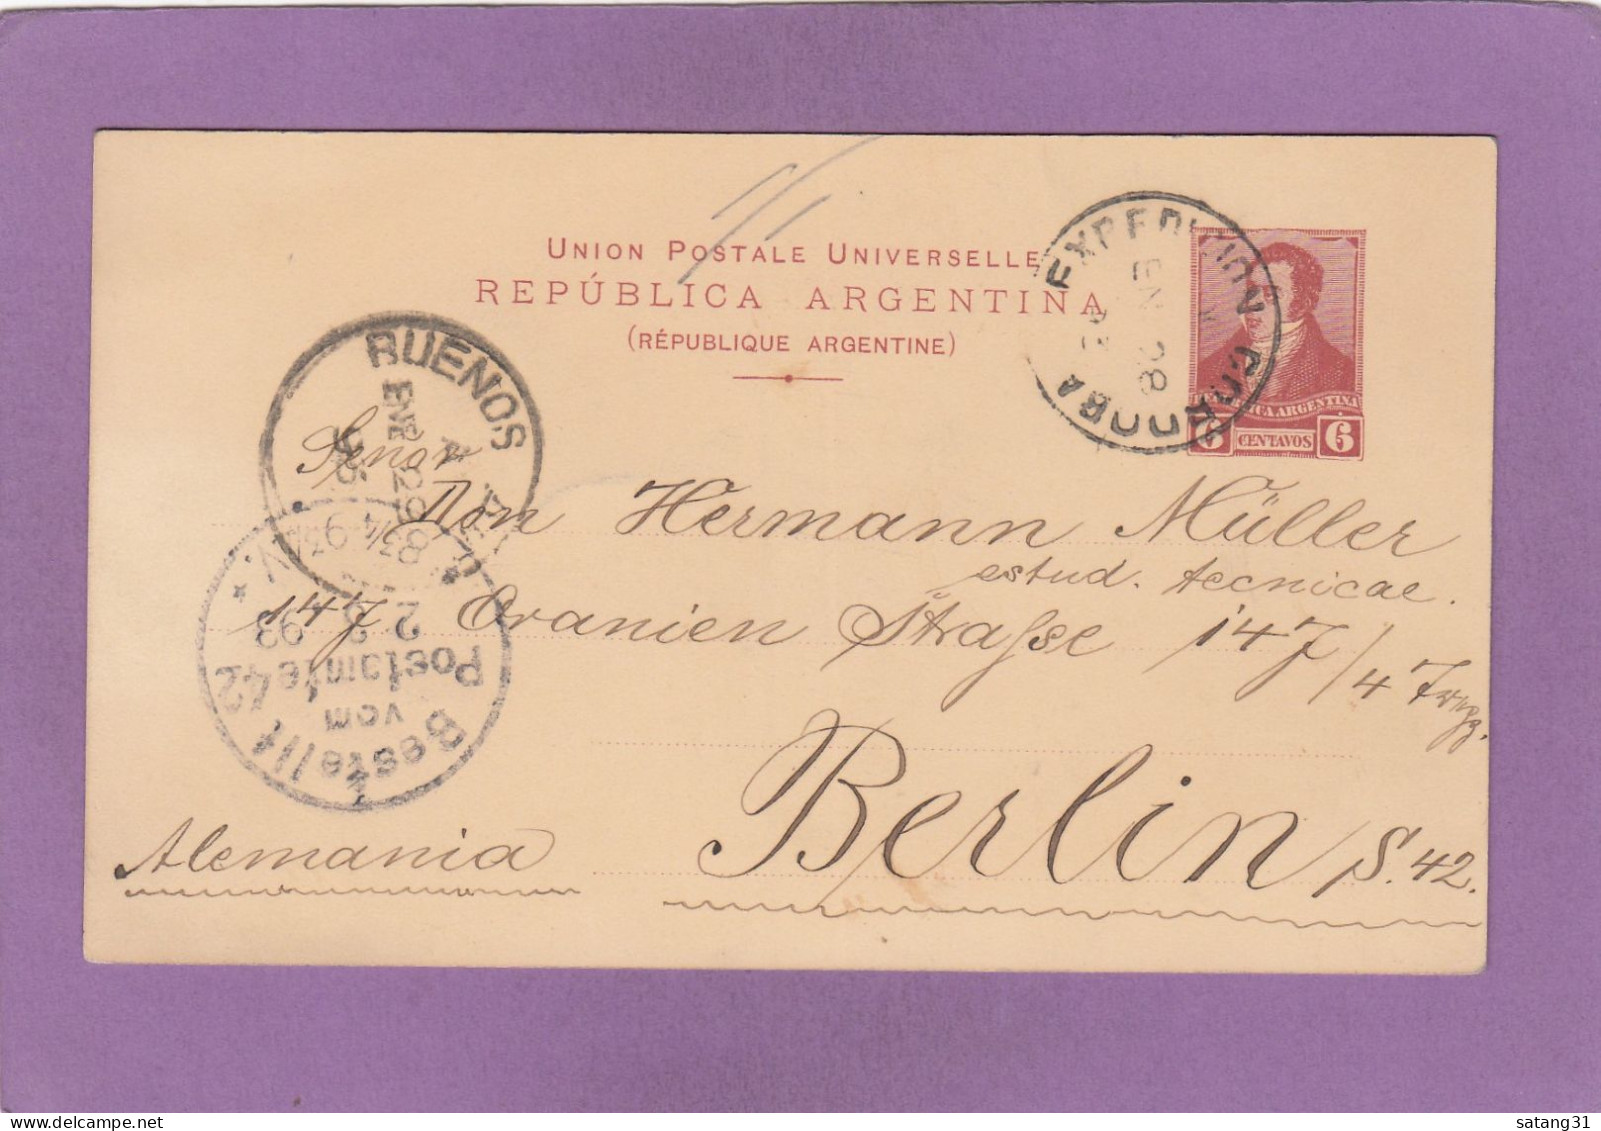 ENTIER POSTAL DE CORDOBA POUR BERLIN,VIA BUENOS AIRES,1893. - Entiers Postaux